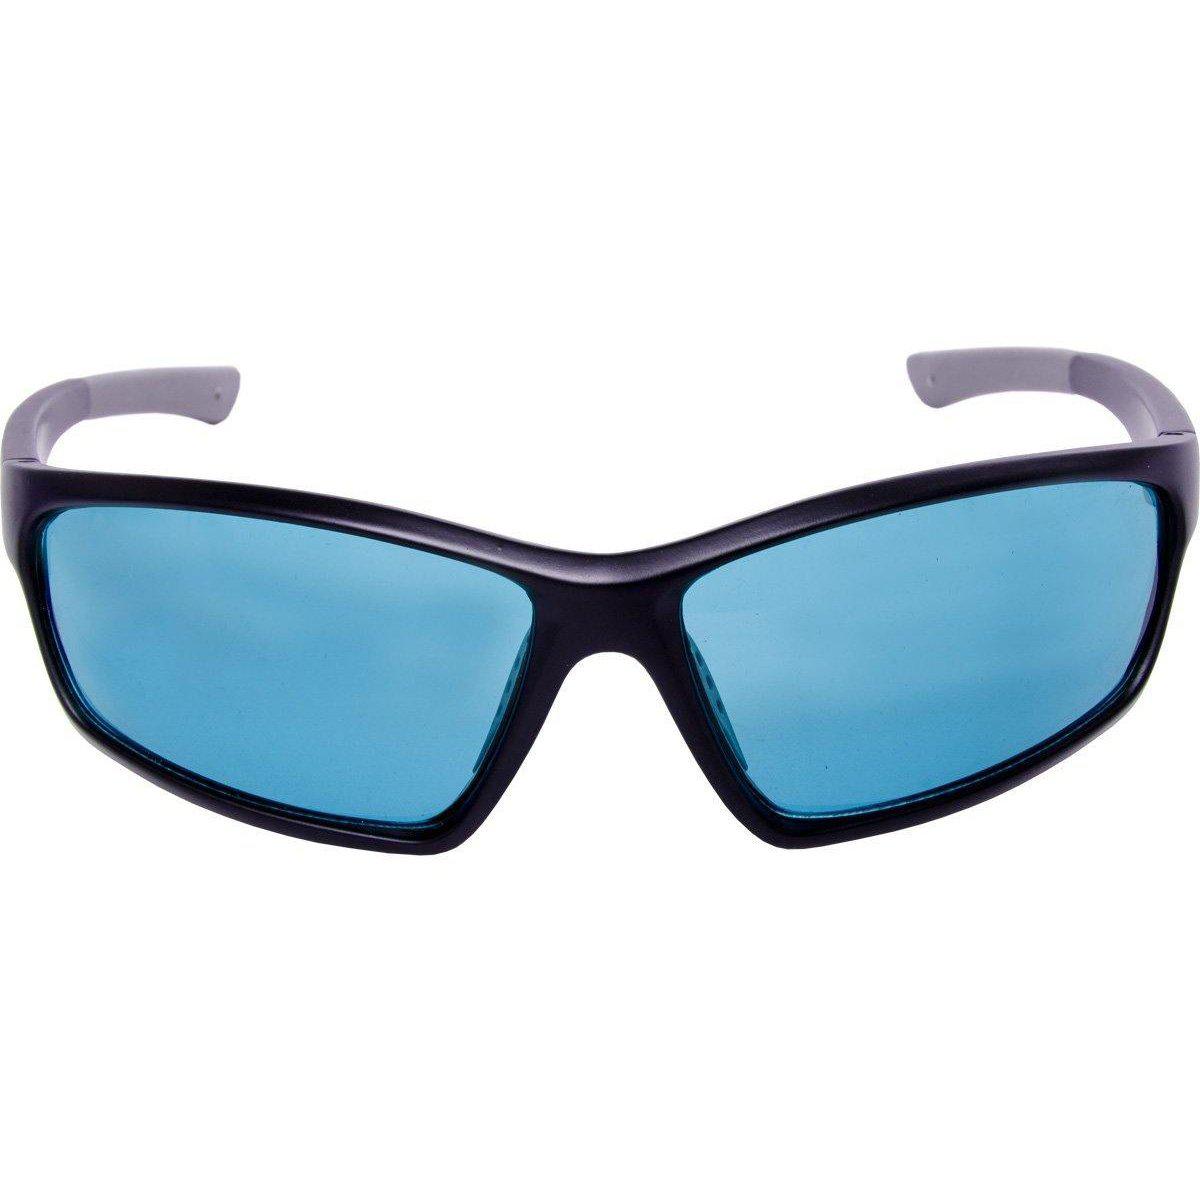 Accessories - Active Eye HPS Grow Room Glasses - 638104019750- Gardin Warehouse